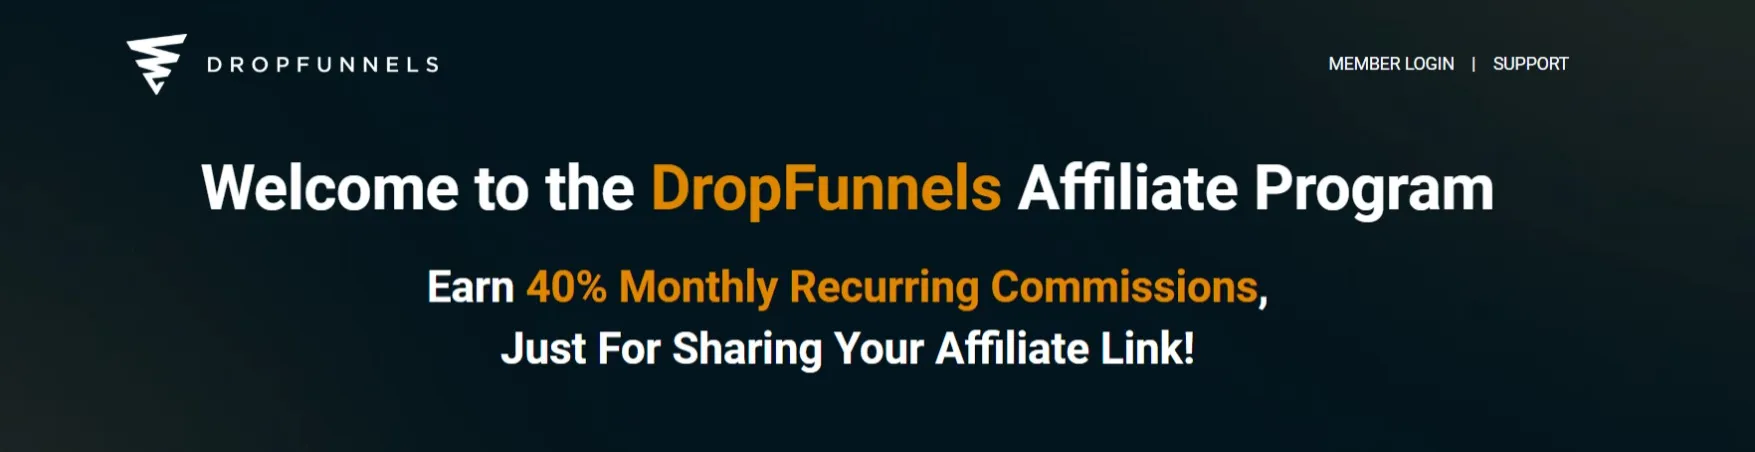 Dropfunnels Review- Affiliate program